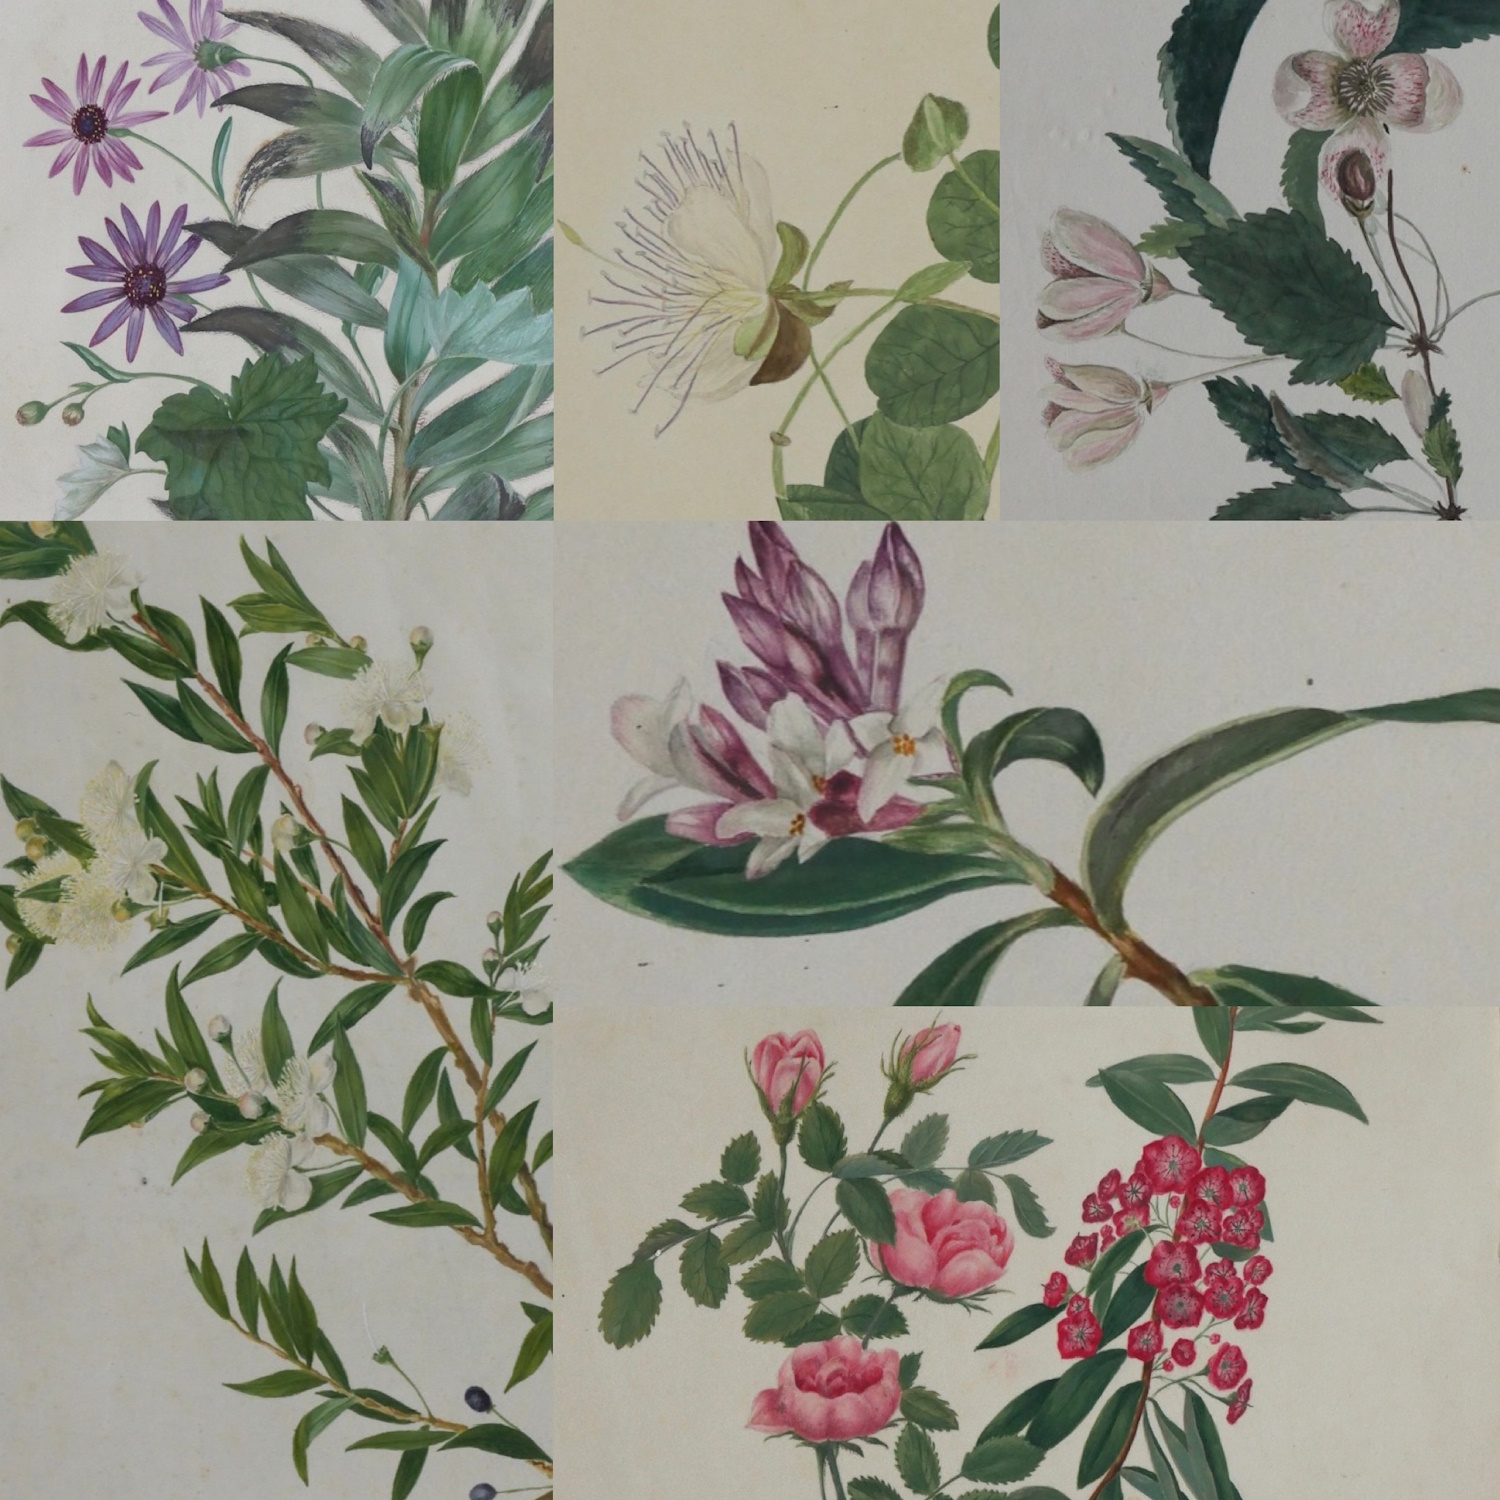 Caroline Amelia Fox – Six Studies of Plants 1801-7